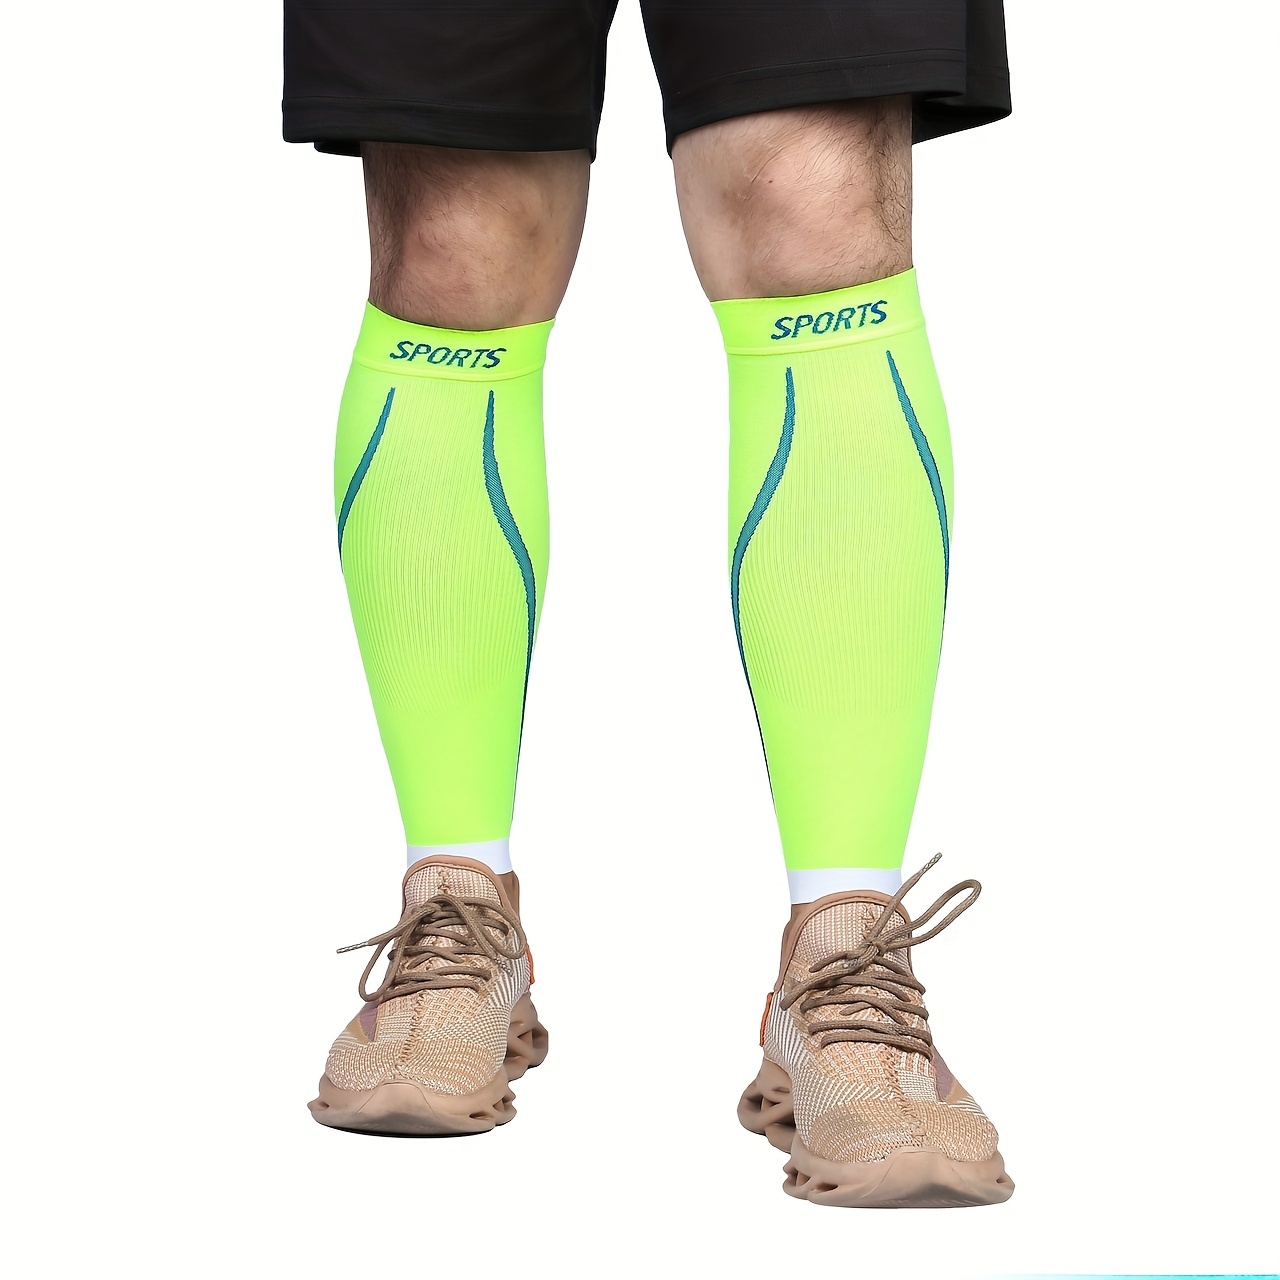 Do compression socks prevent sports injuries?